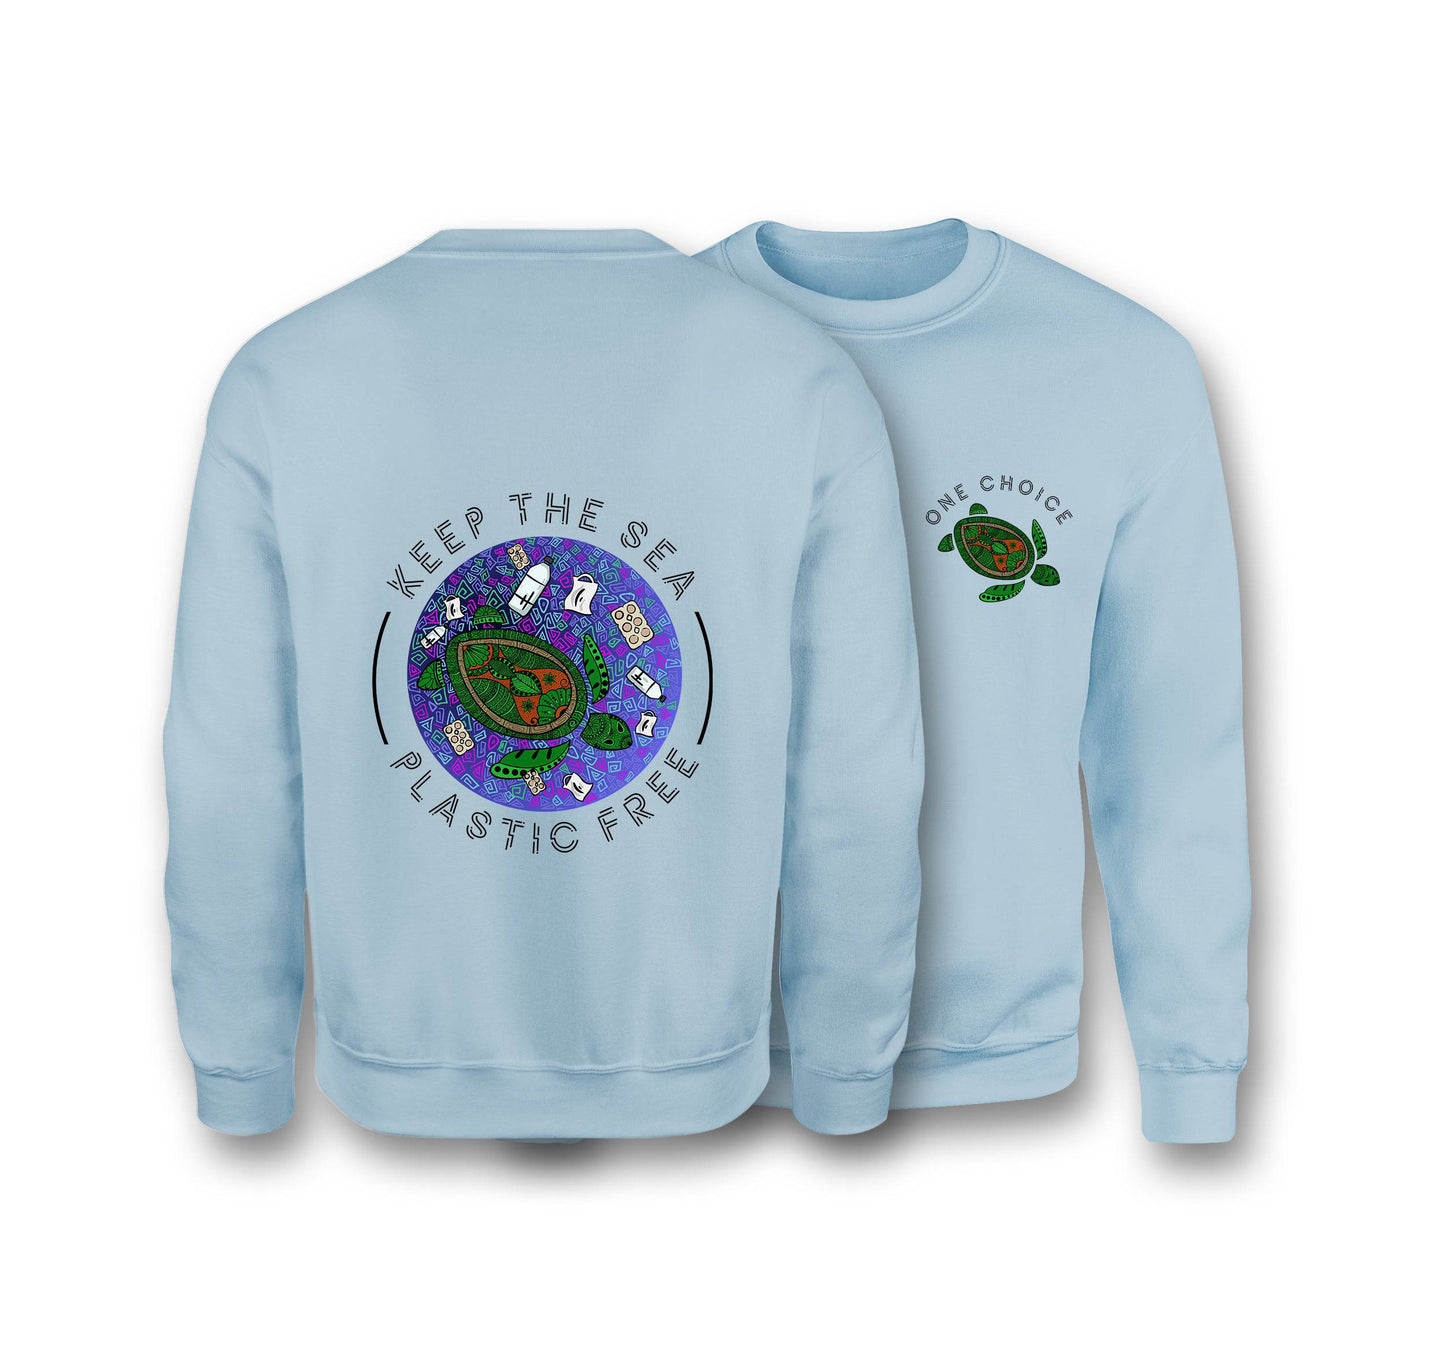 Keep The Sea Plastic Free - Organic Cotton Sweatshirt - One Choice Apparel